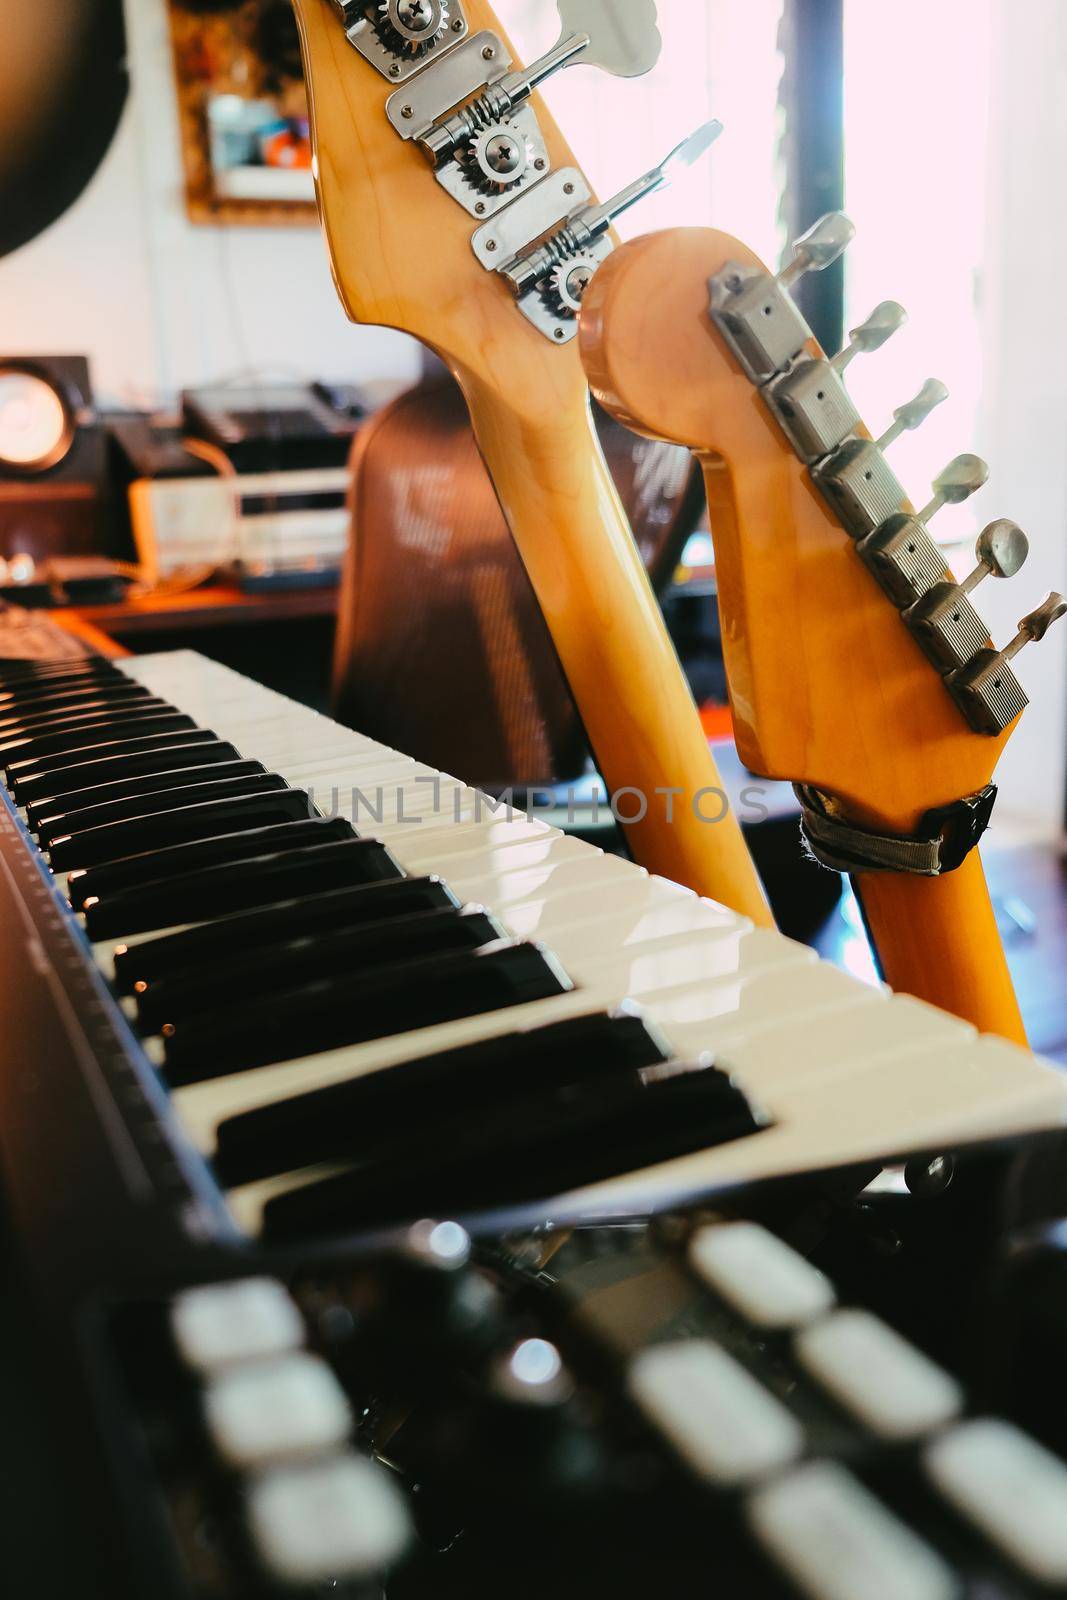 Guitar and studio equipment by ponsulak